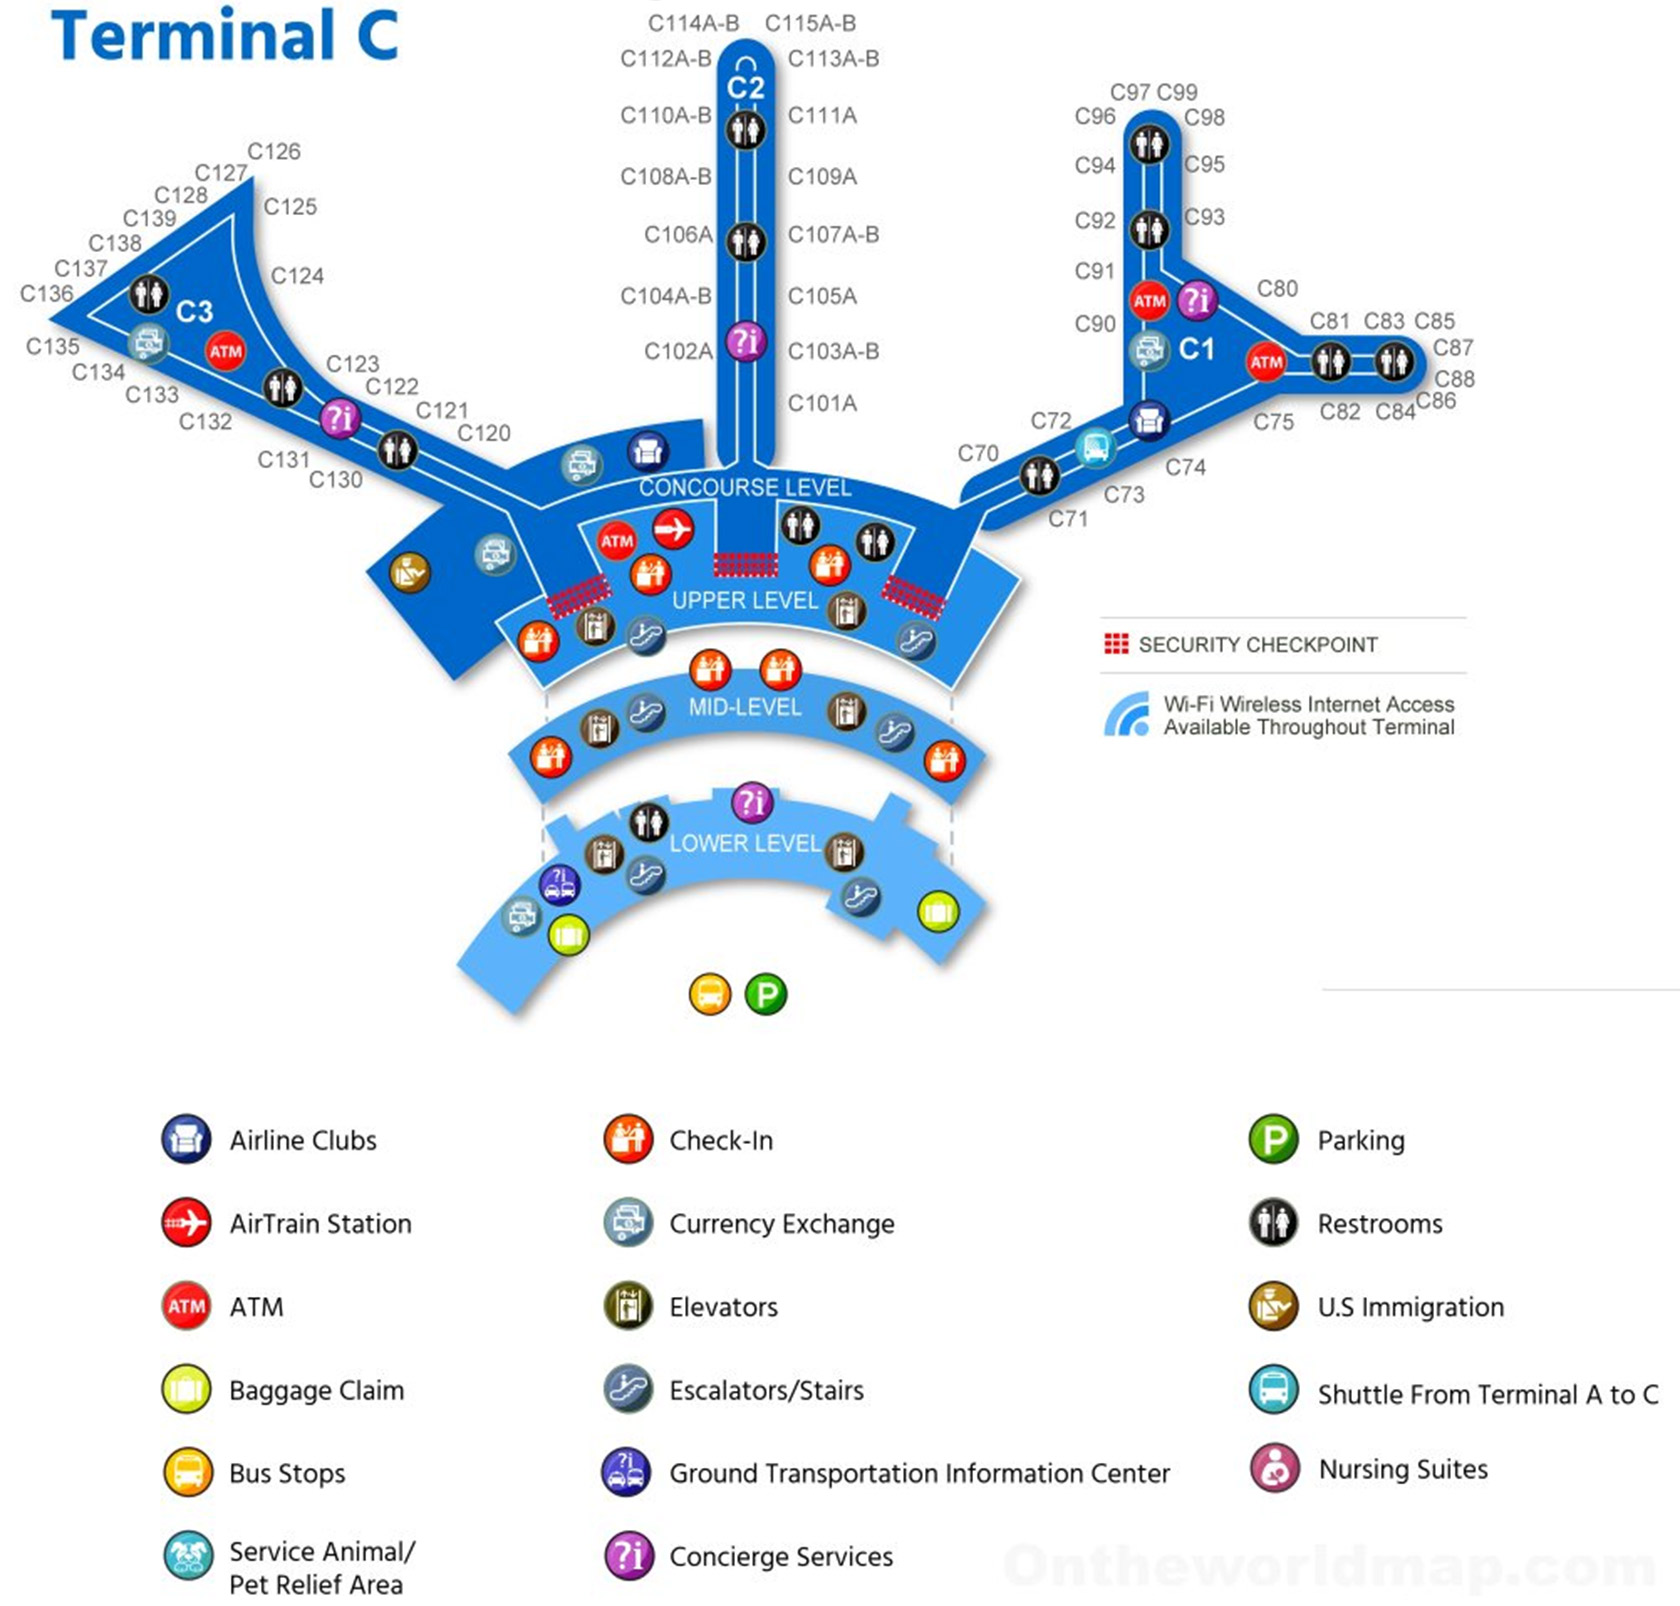 Leland Morris Buzz: Newark Airport Terminal C International Departures